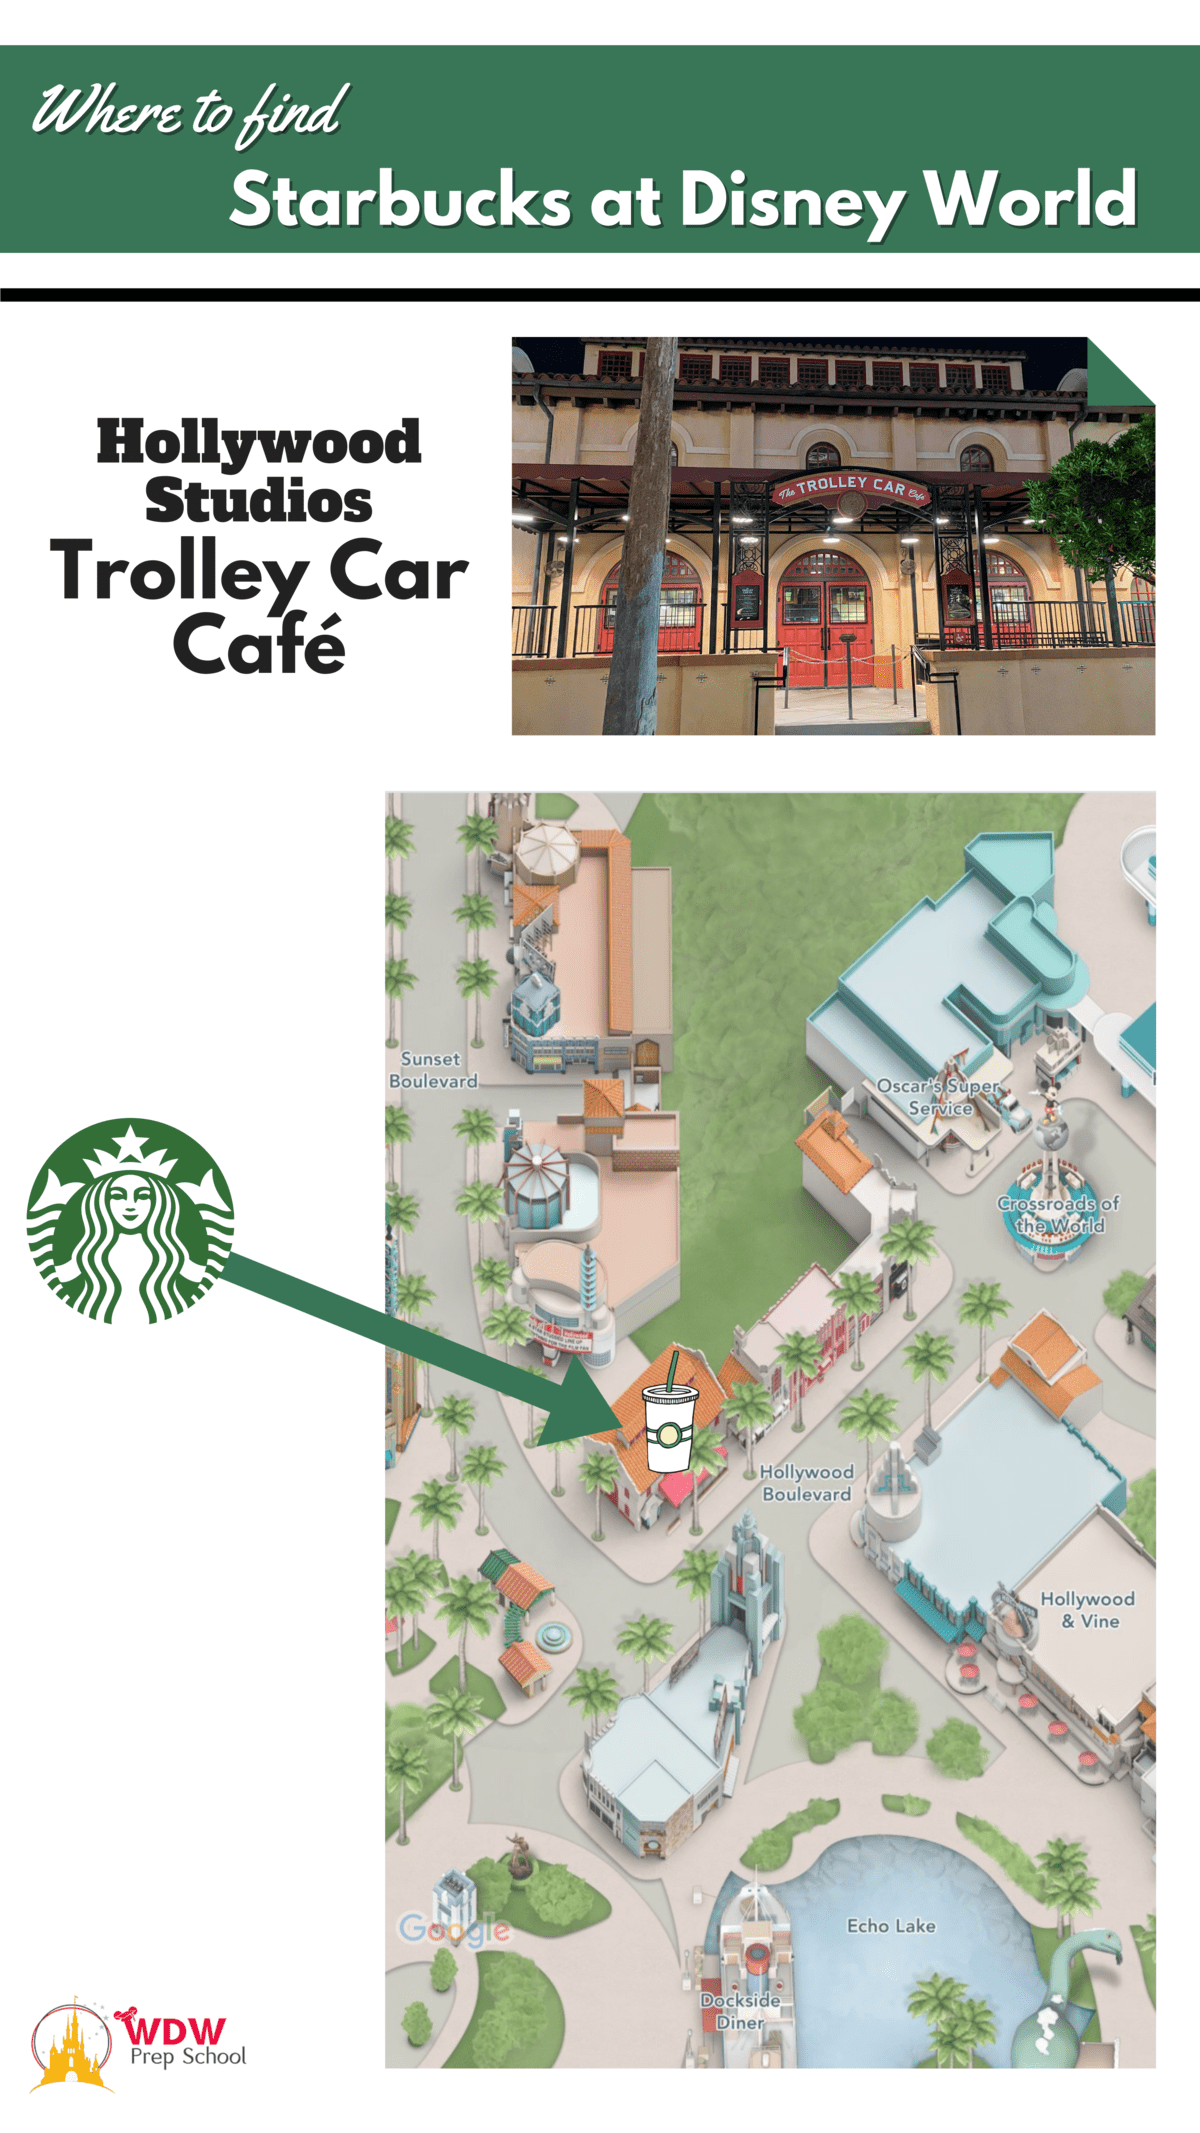 Starbucks at Disney World - Magic Kingdom and Beyond